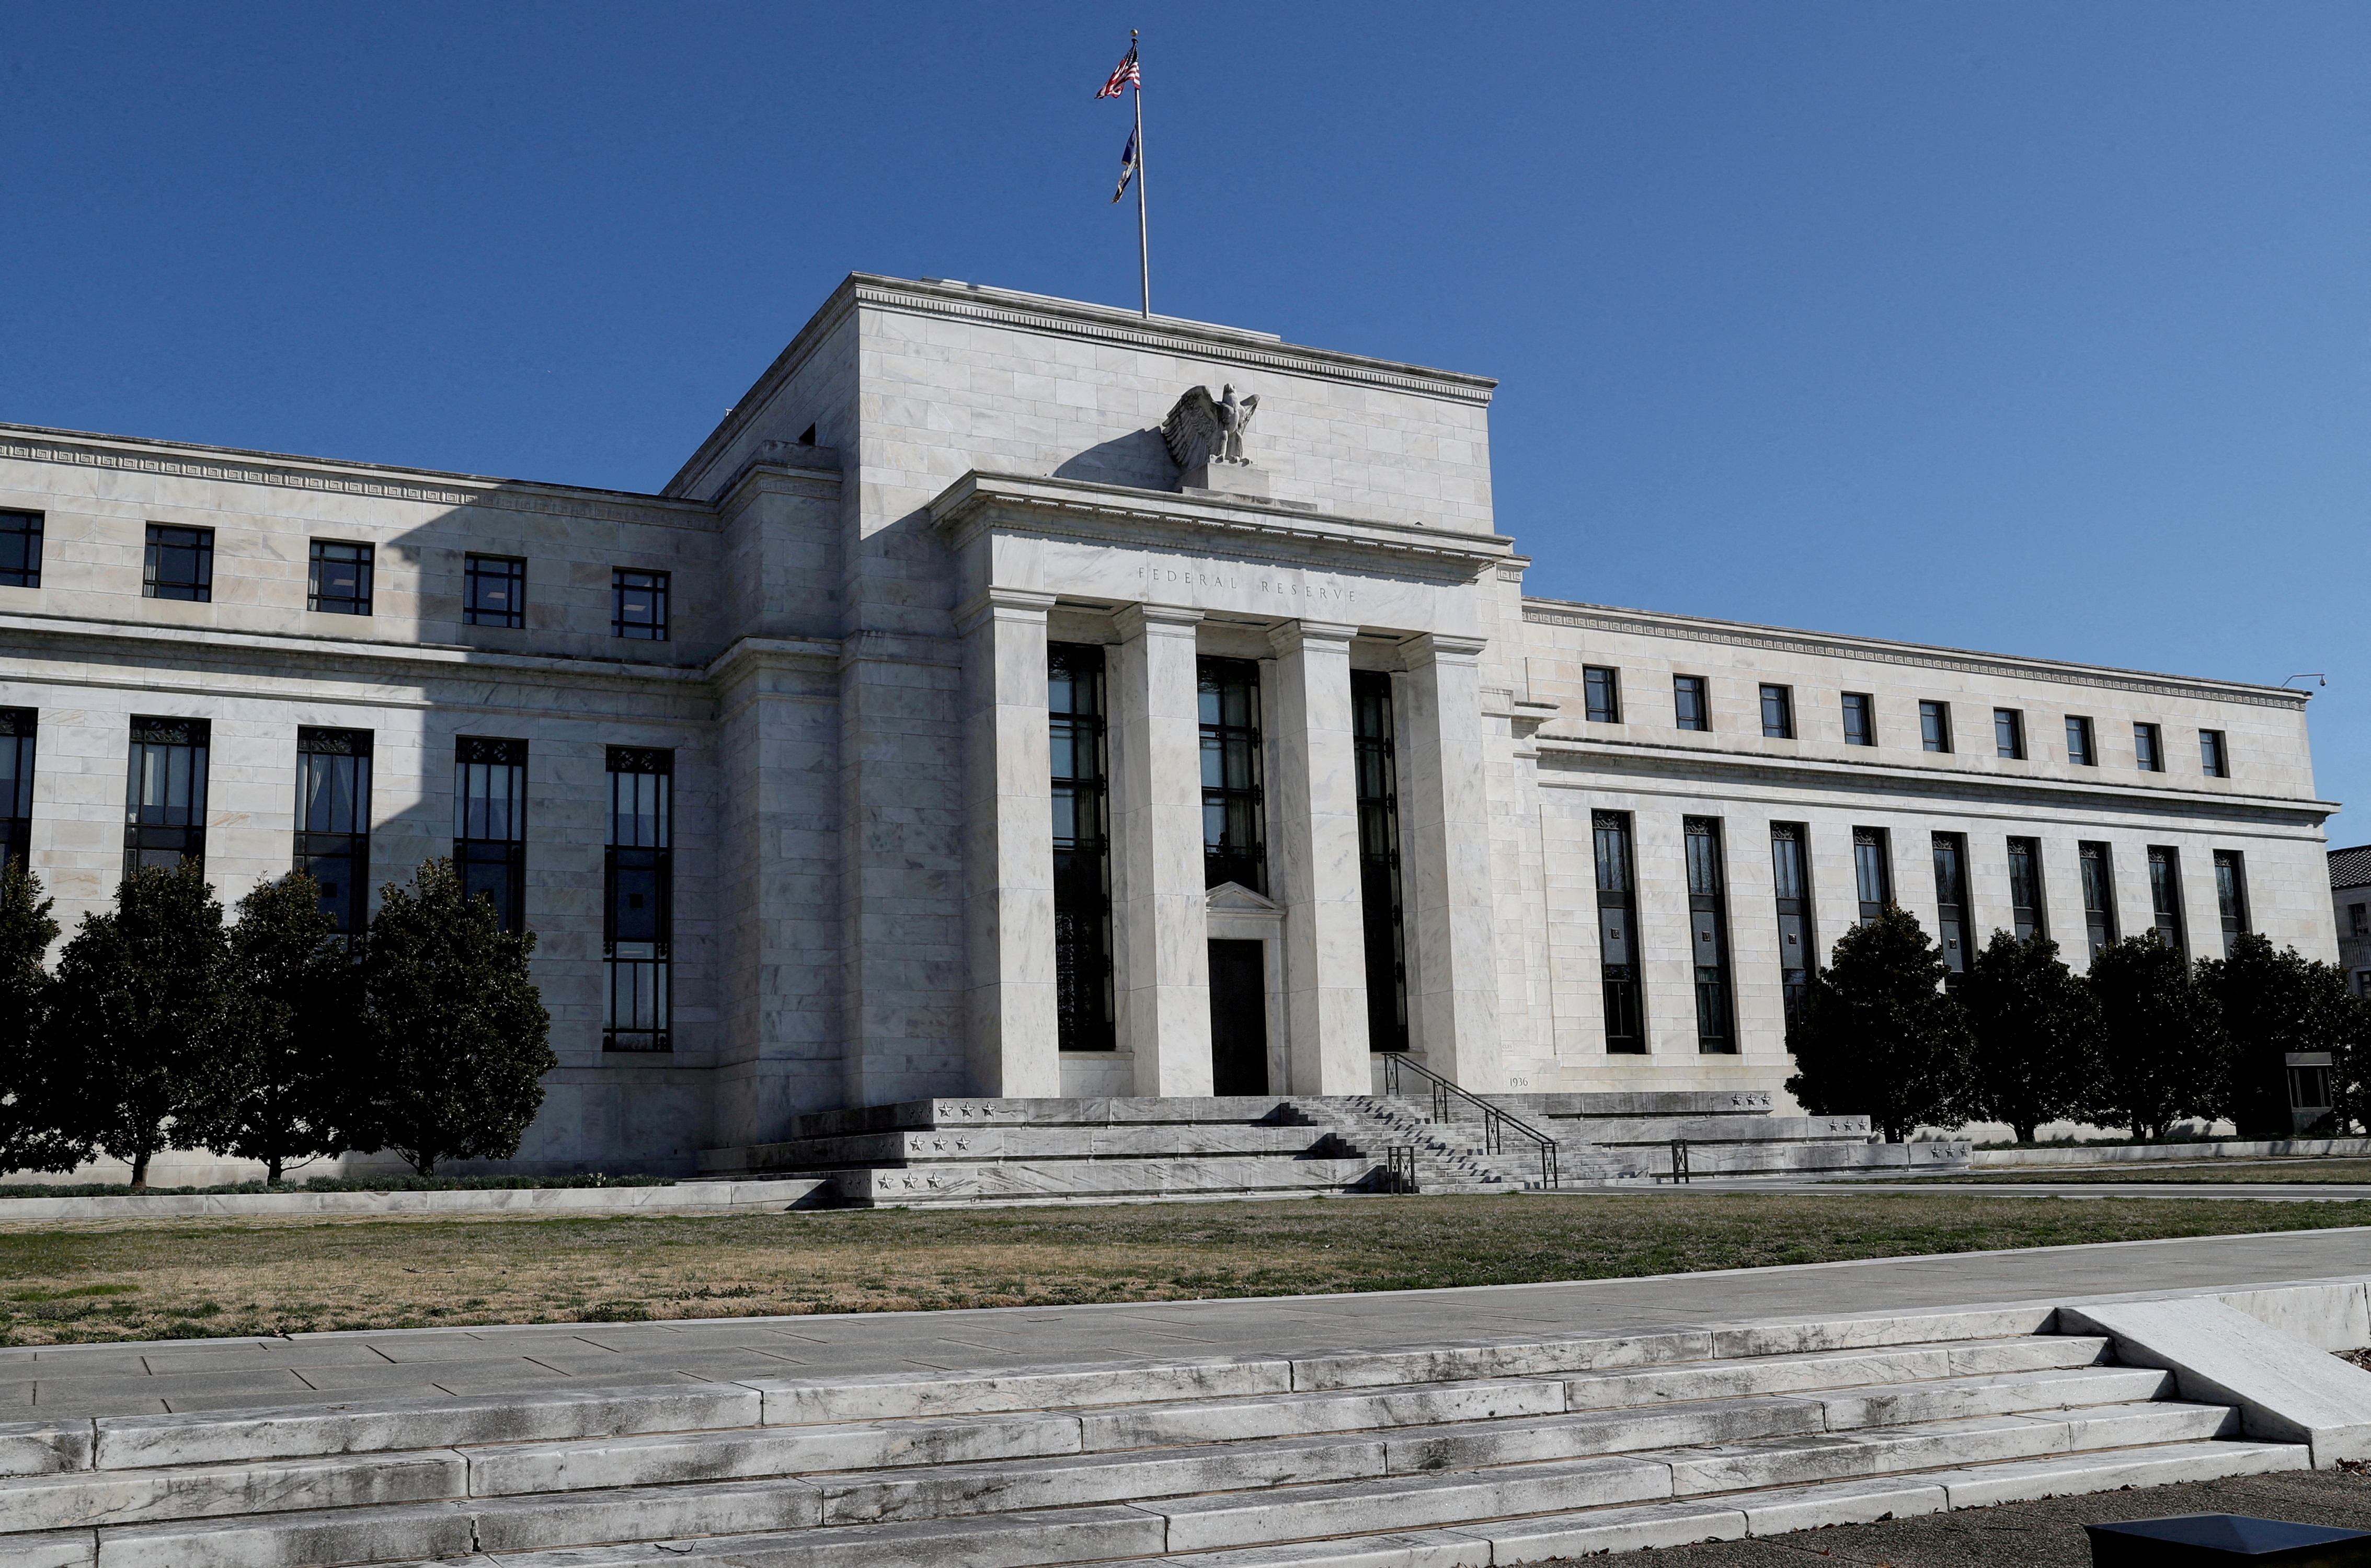 The U.S. Federal Reserve Board building in Washington